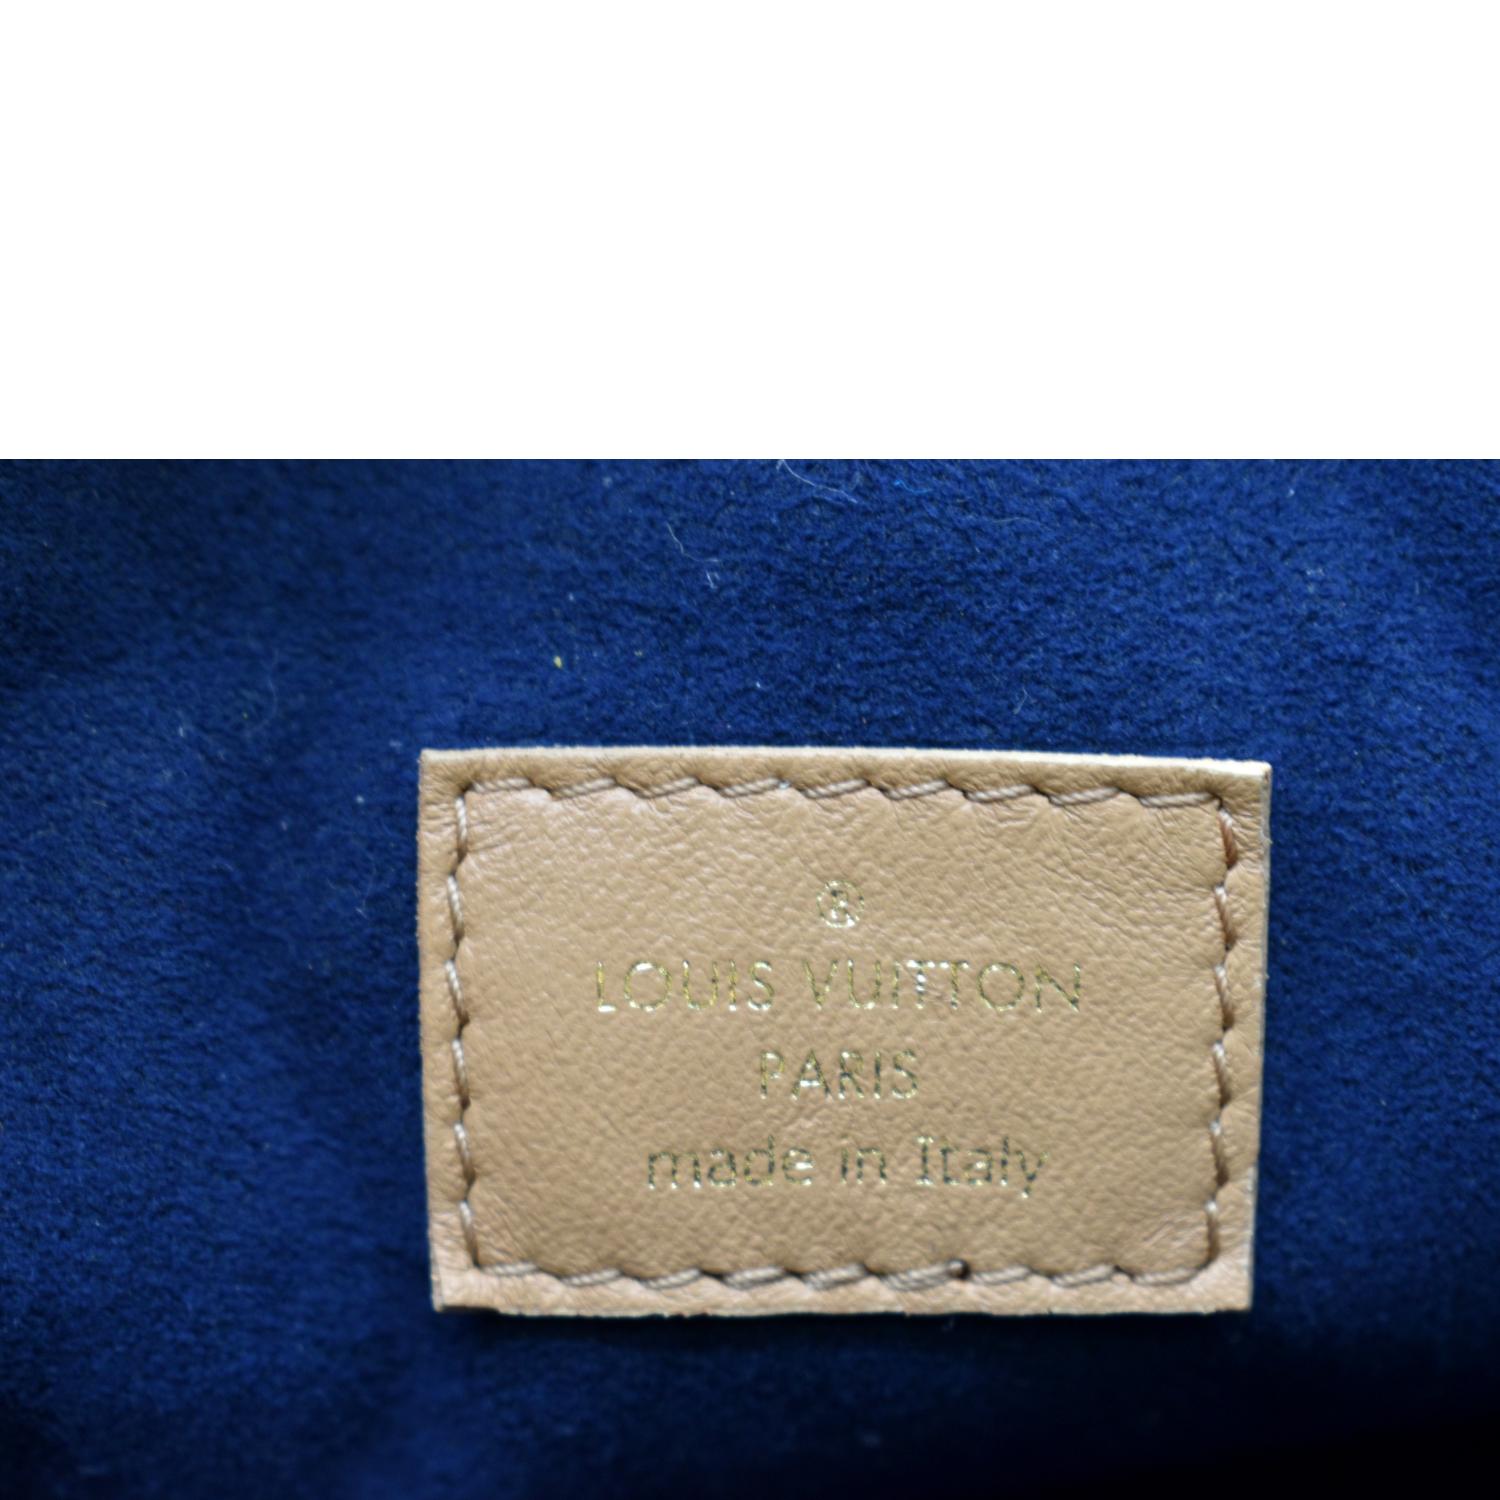 Louis Vuitton's Coussin PM Now Comes In Bleu Glacier And Camel